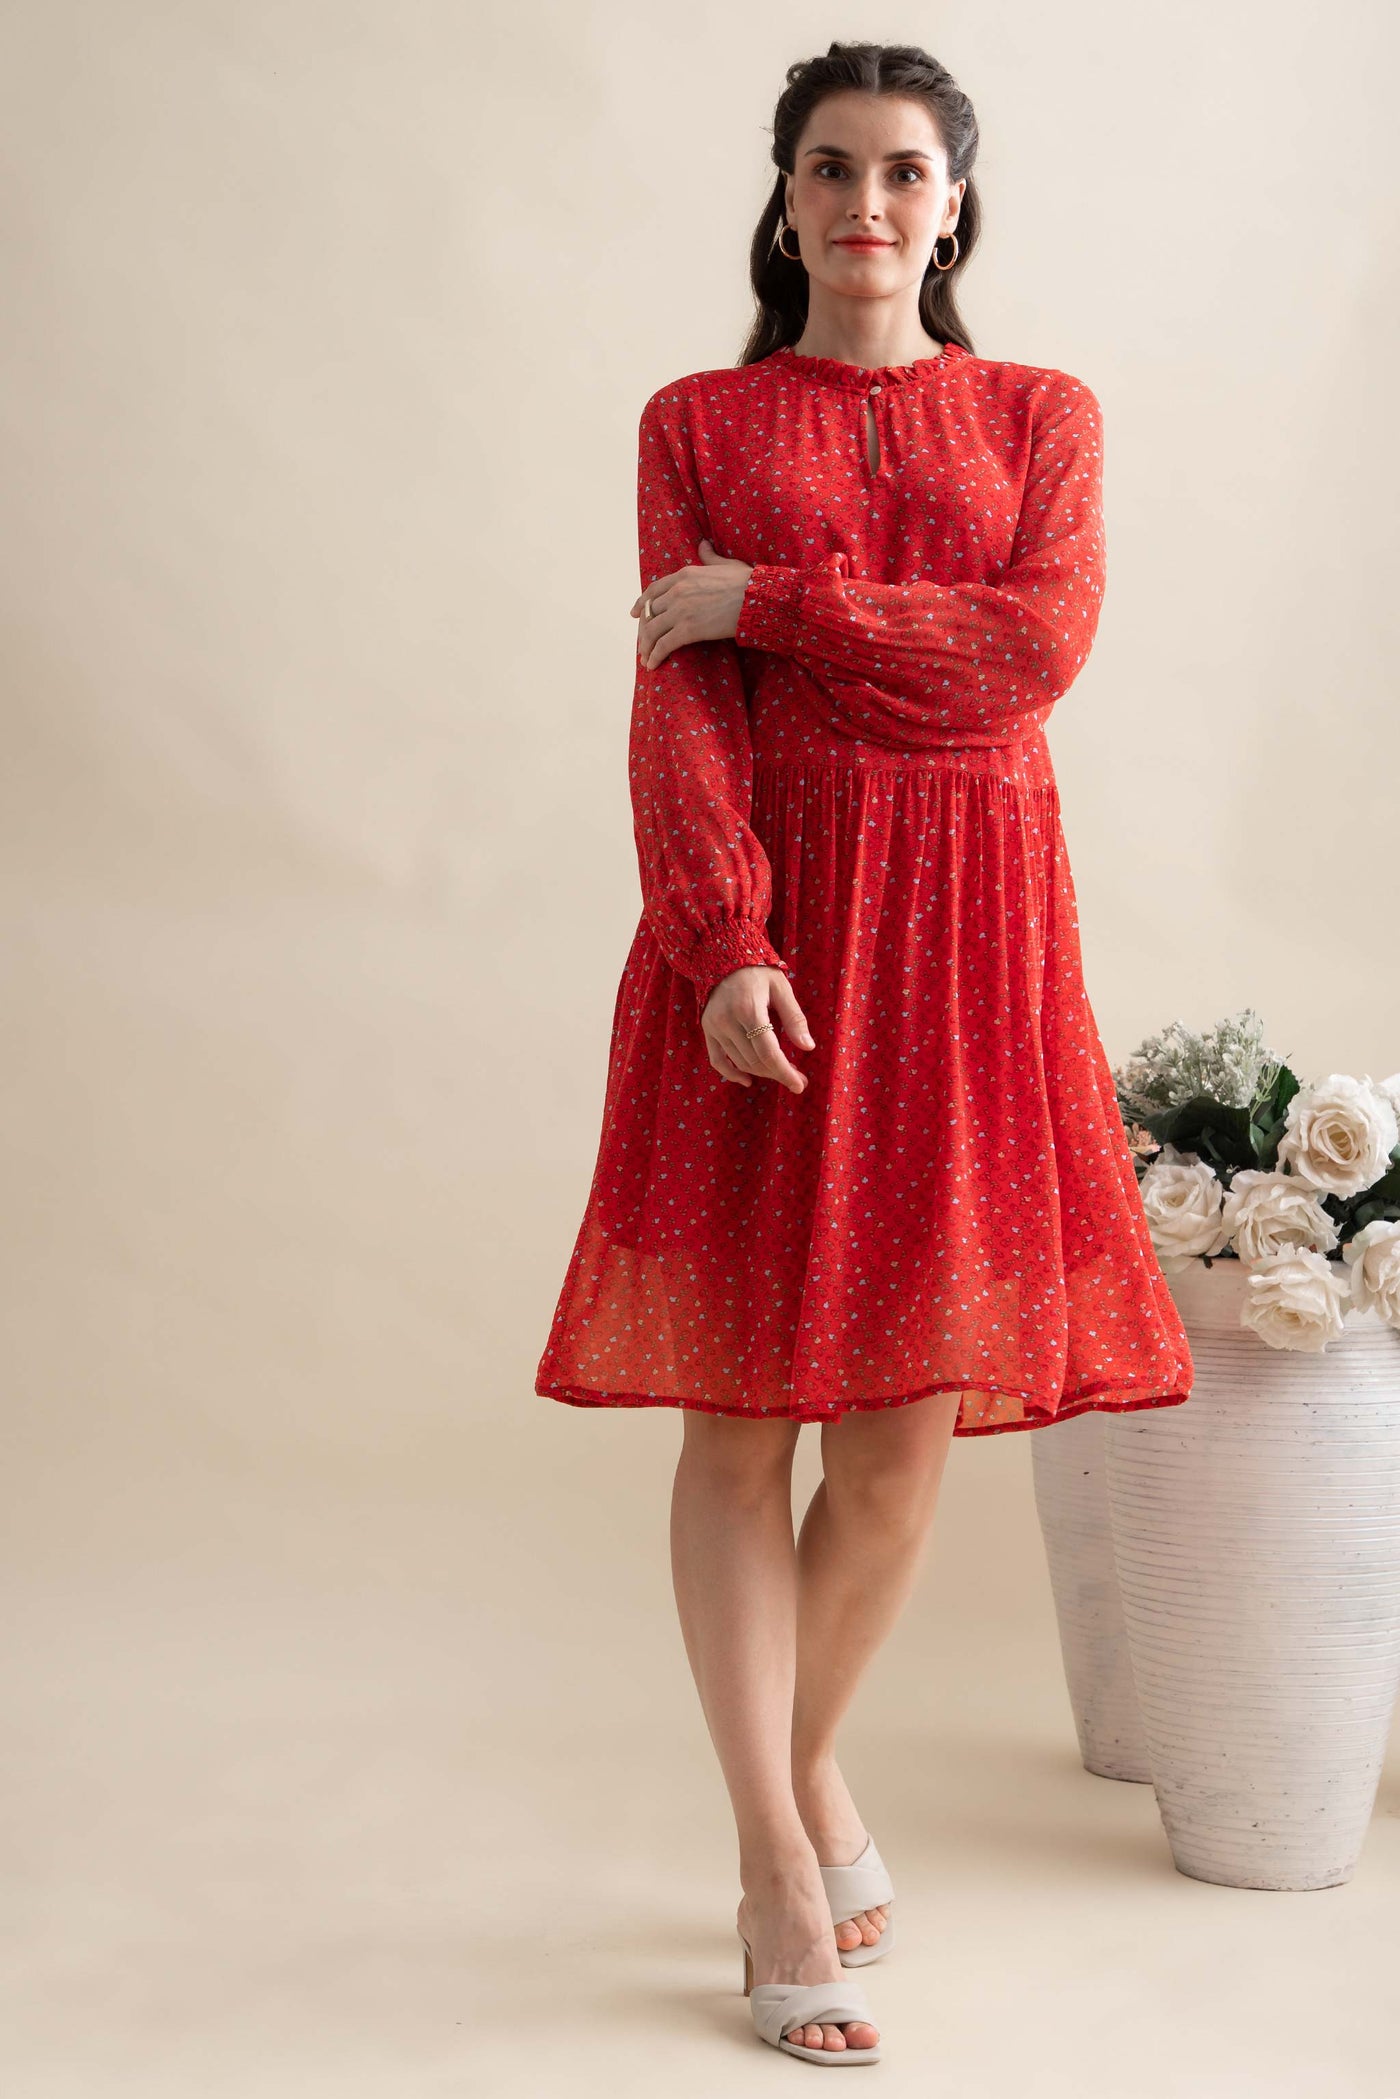 Poinsettia Red Dress